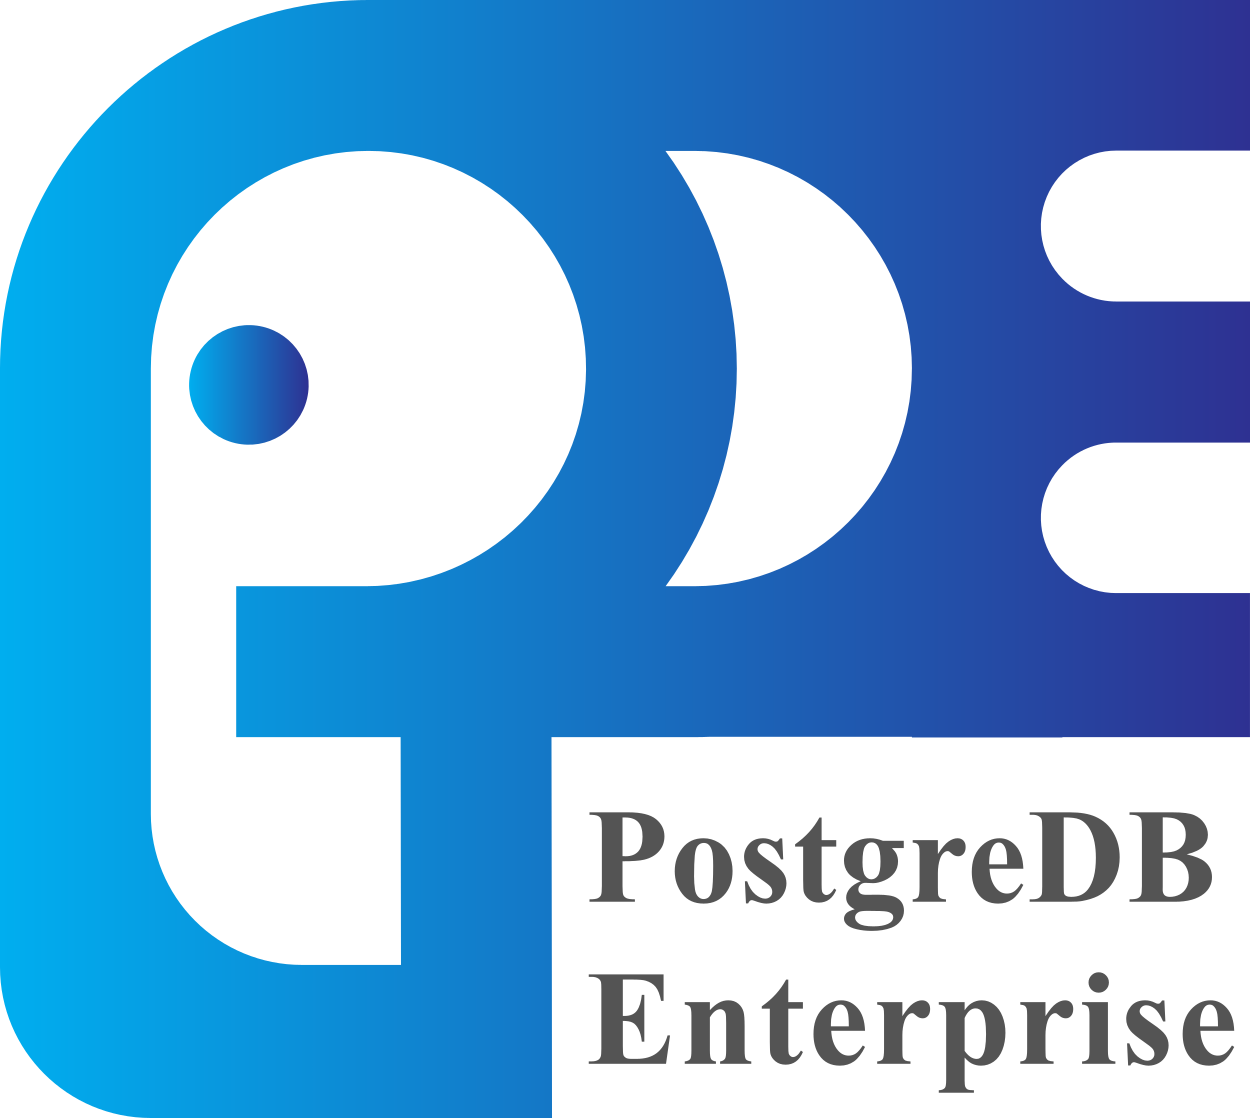 PostgreDB Enterprise logo